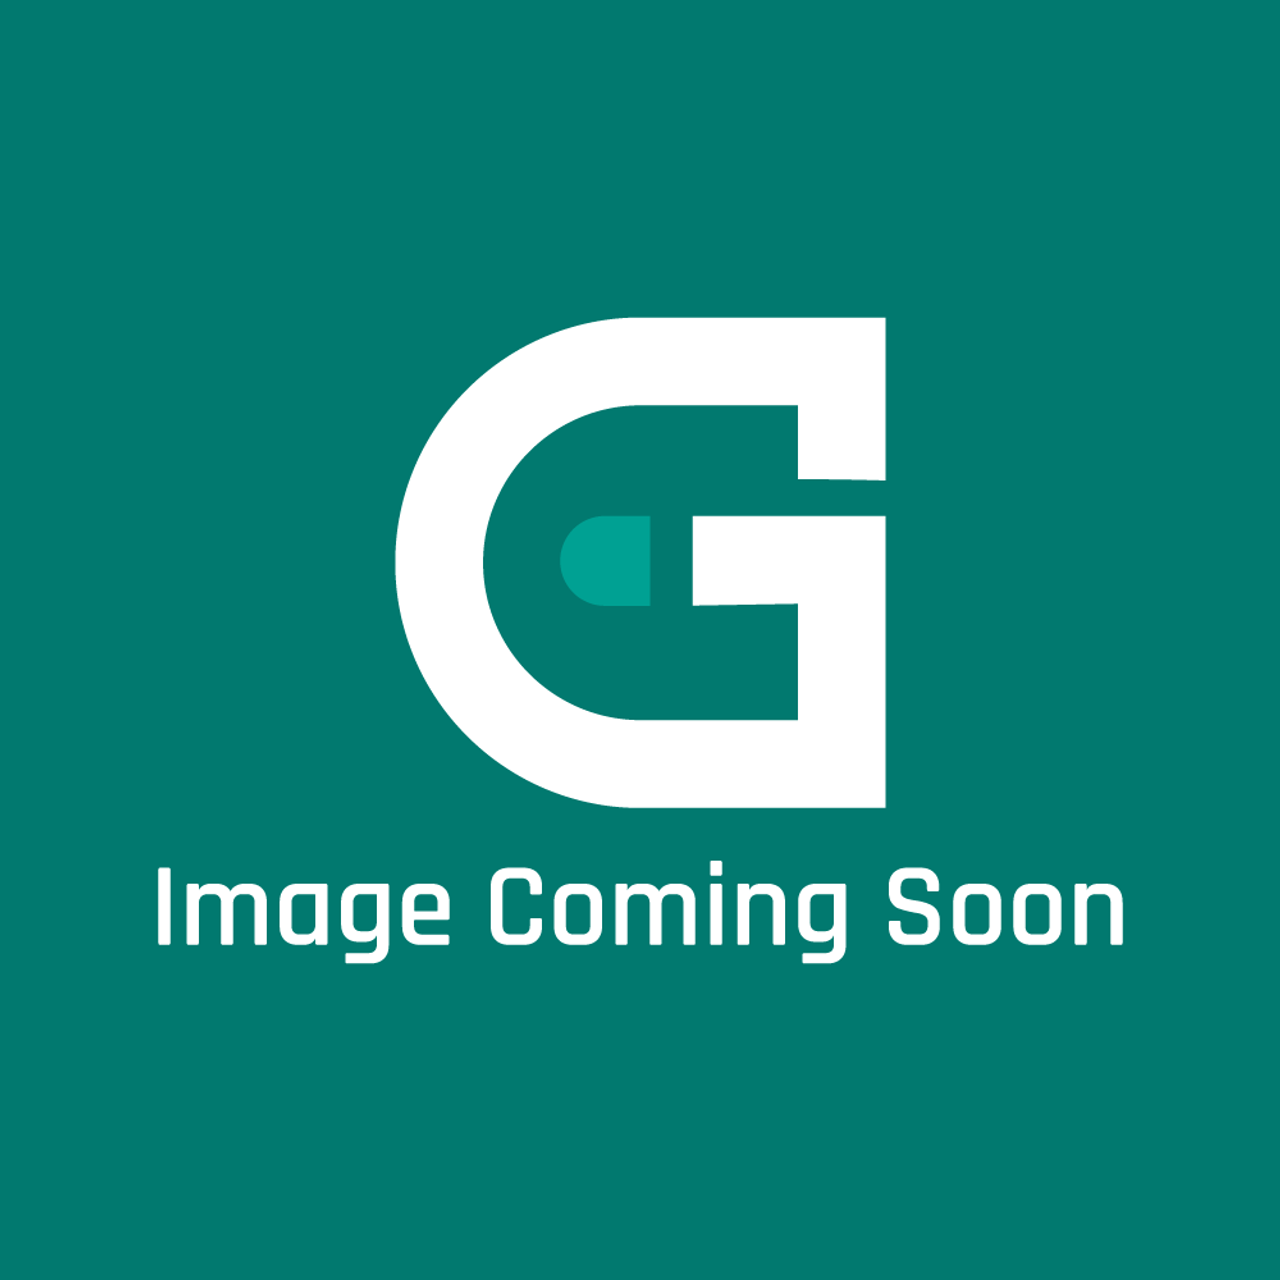 GE Appliances WX8X73 - 8FLEX DRYER DUCT W/2CLMPS - Image Coming Soon!